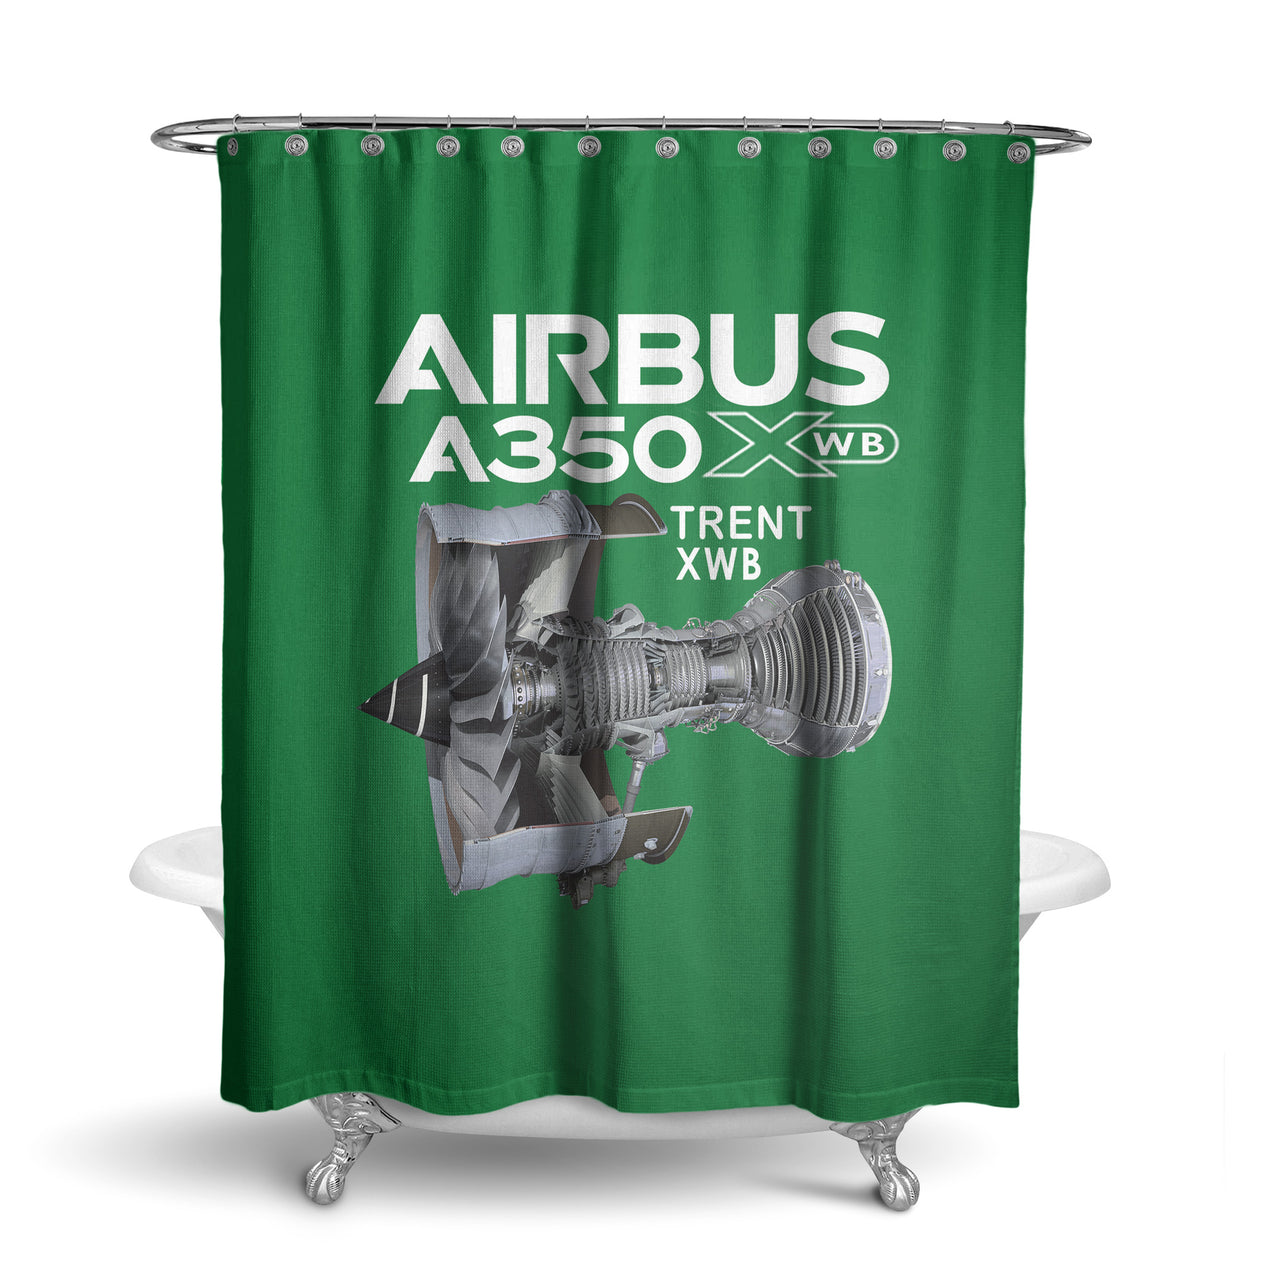 Airbus A350 & Trent Wxb Engine Designed Shower Curtains